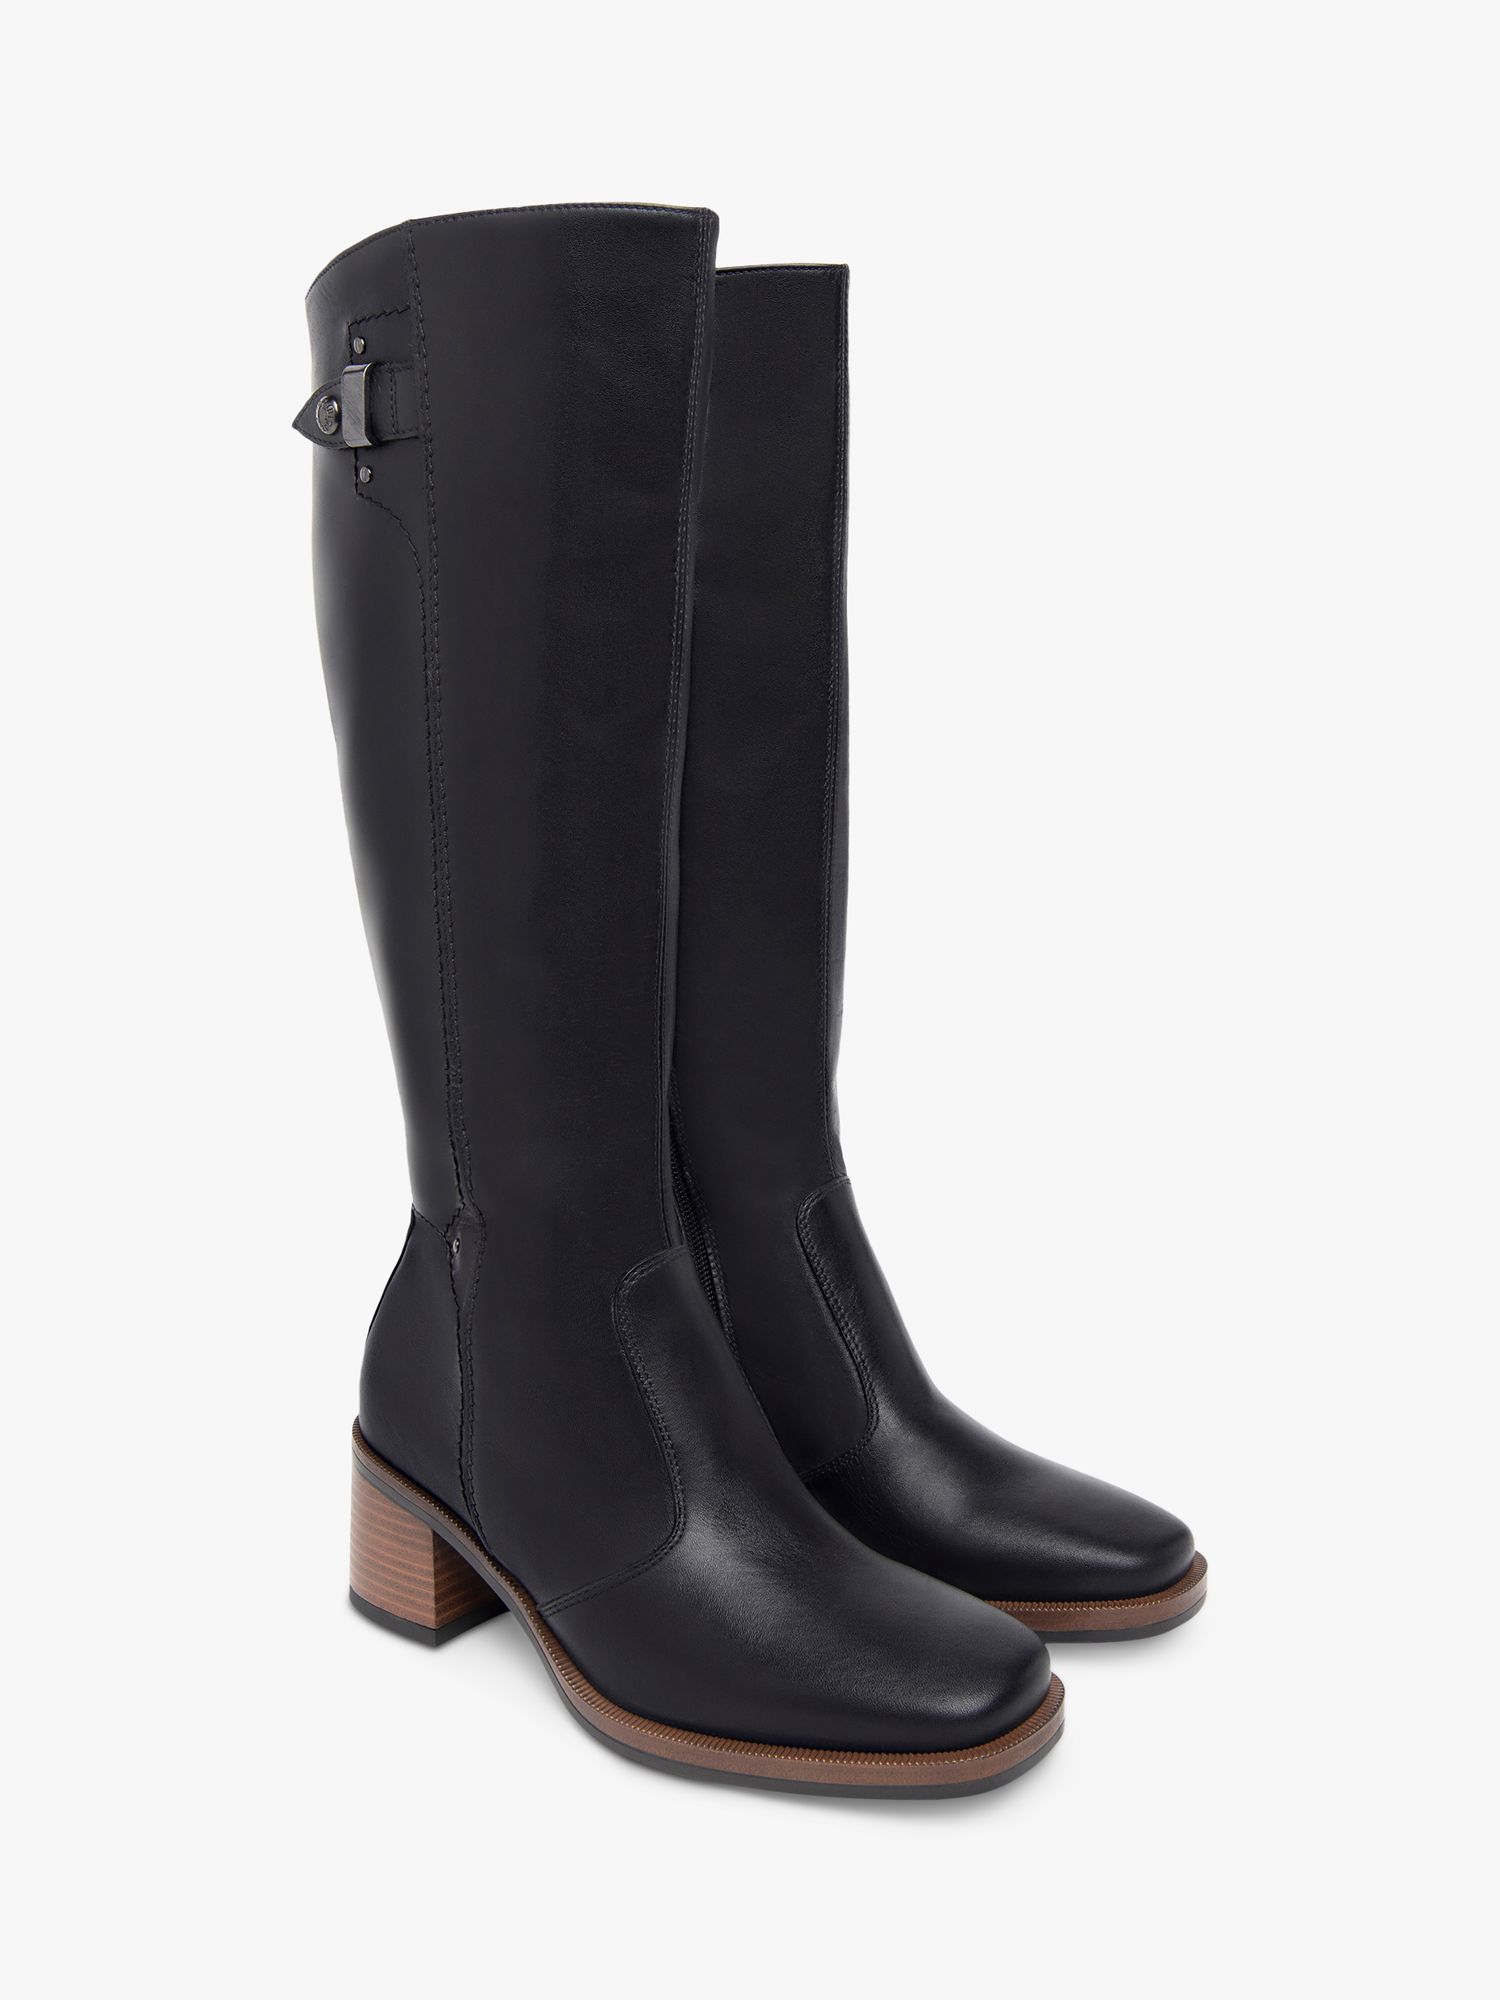 NeroGiardini Square Toe Block Heel Knee High Leather Boots, Black, 3